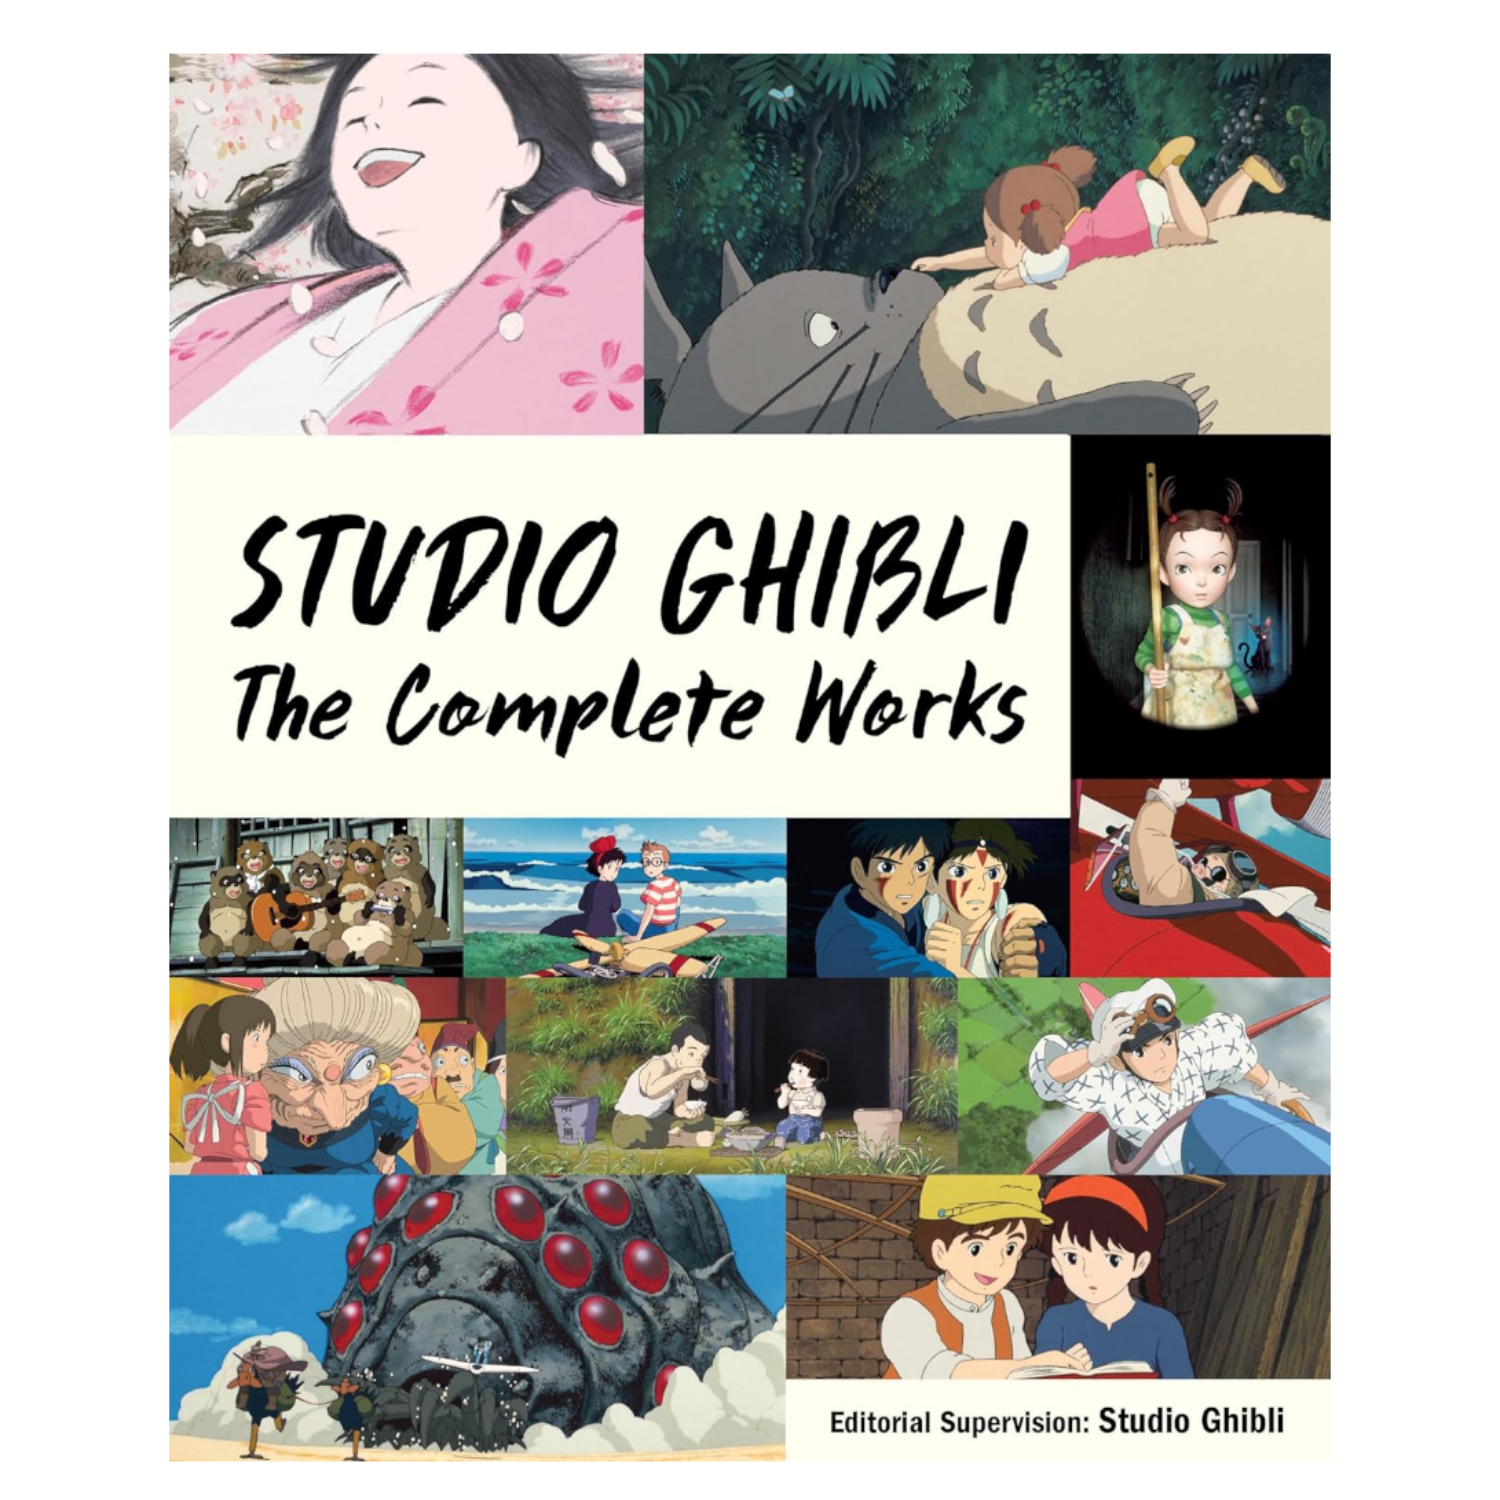 Book Review: 'Shuna's Journey,' by Hayao Miyazaki - The New York Times